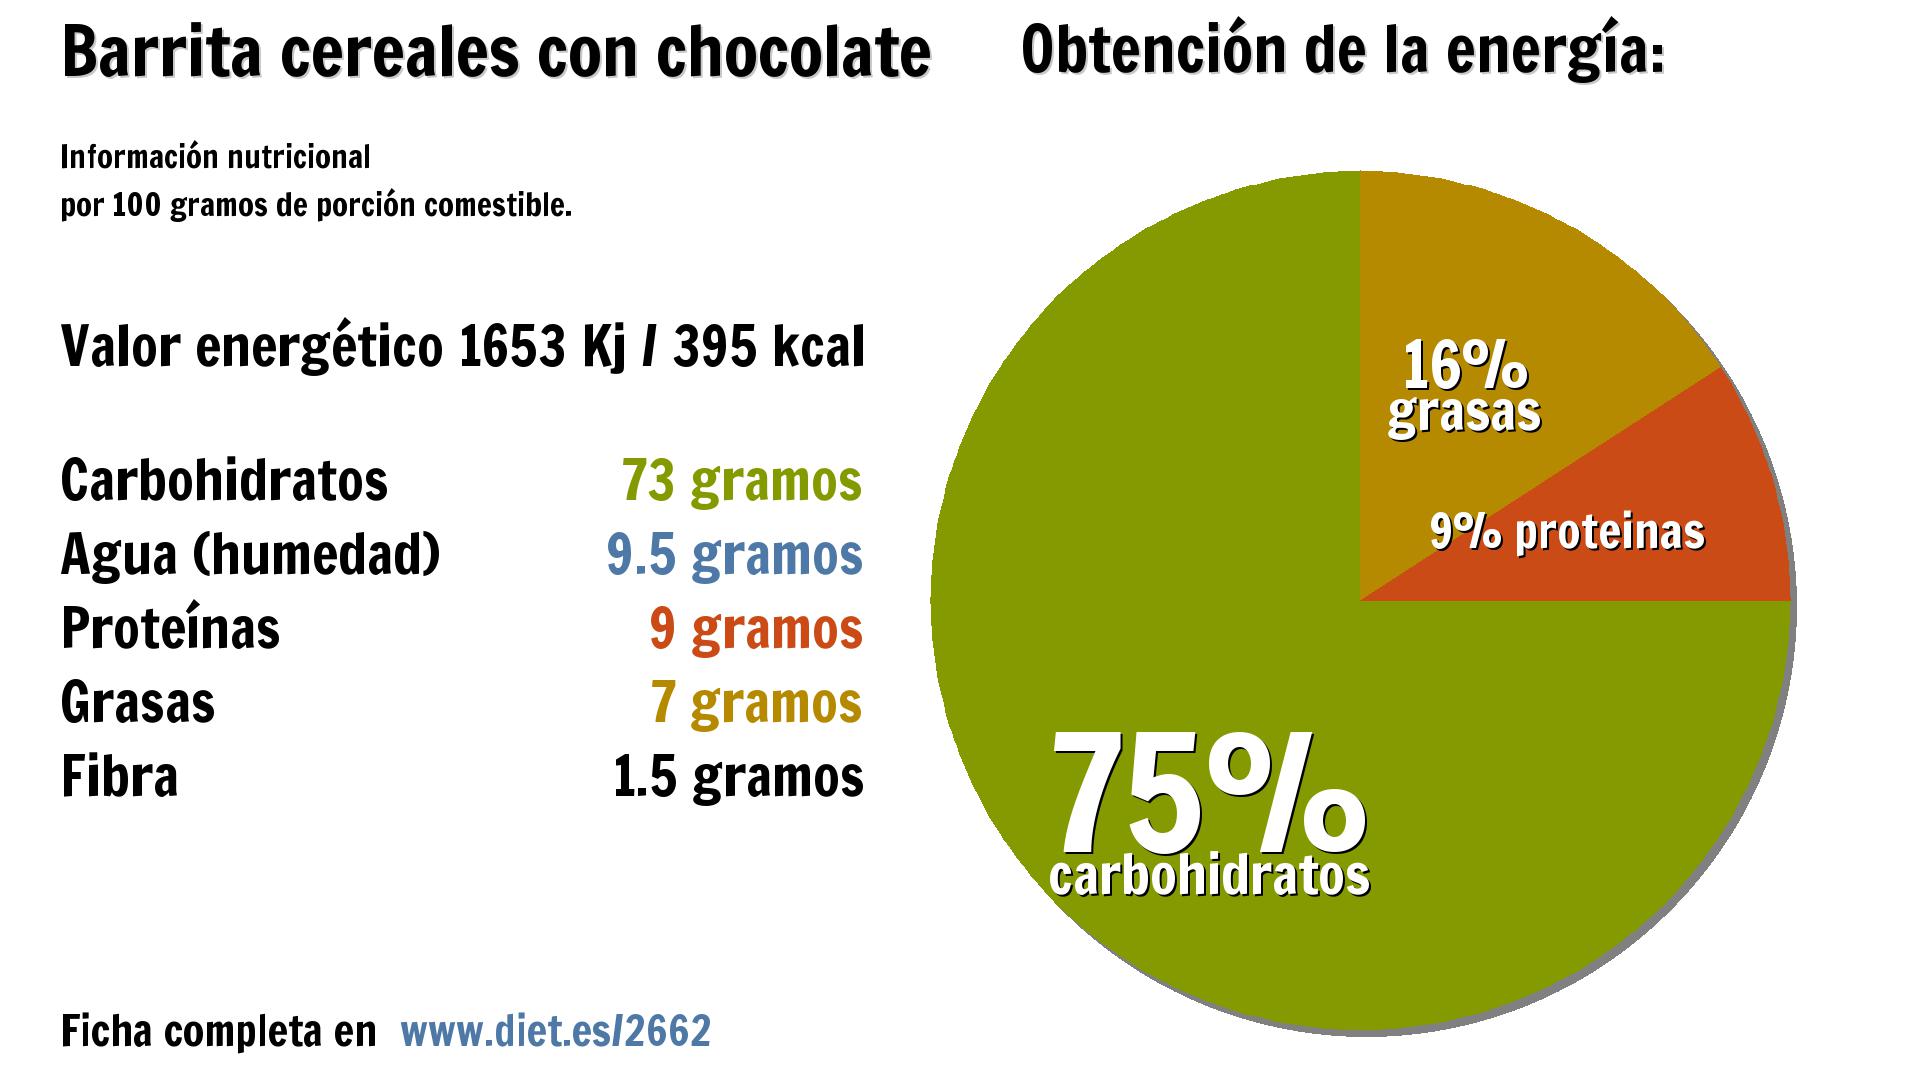 Barrita cereales con chocolate: energía 1653 Kj, carbohidratos 73 g., agua 10 g., proteínas 9 g., grasas 7 g. y fibra 2 g.